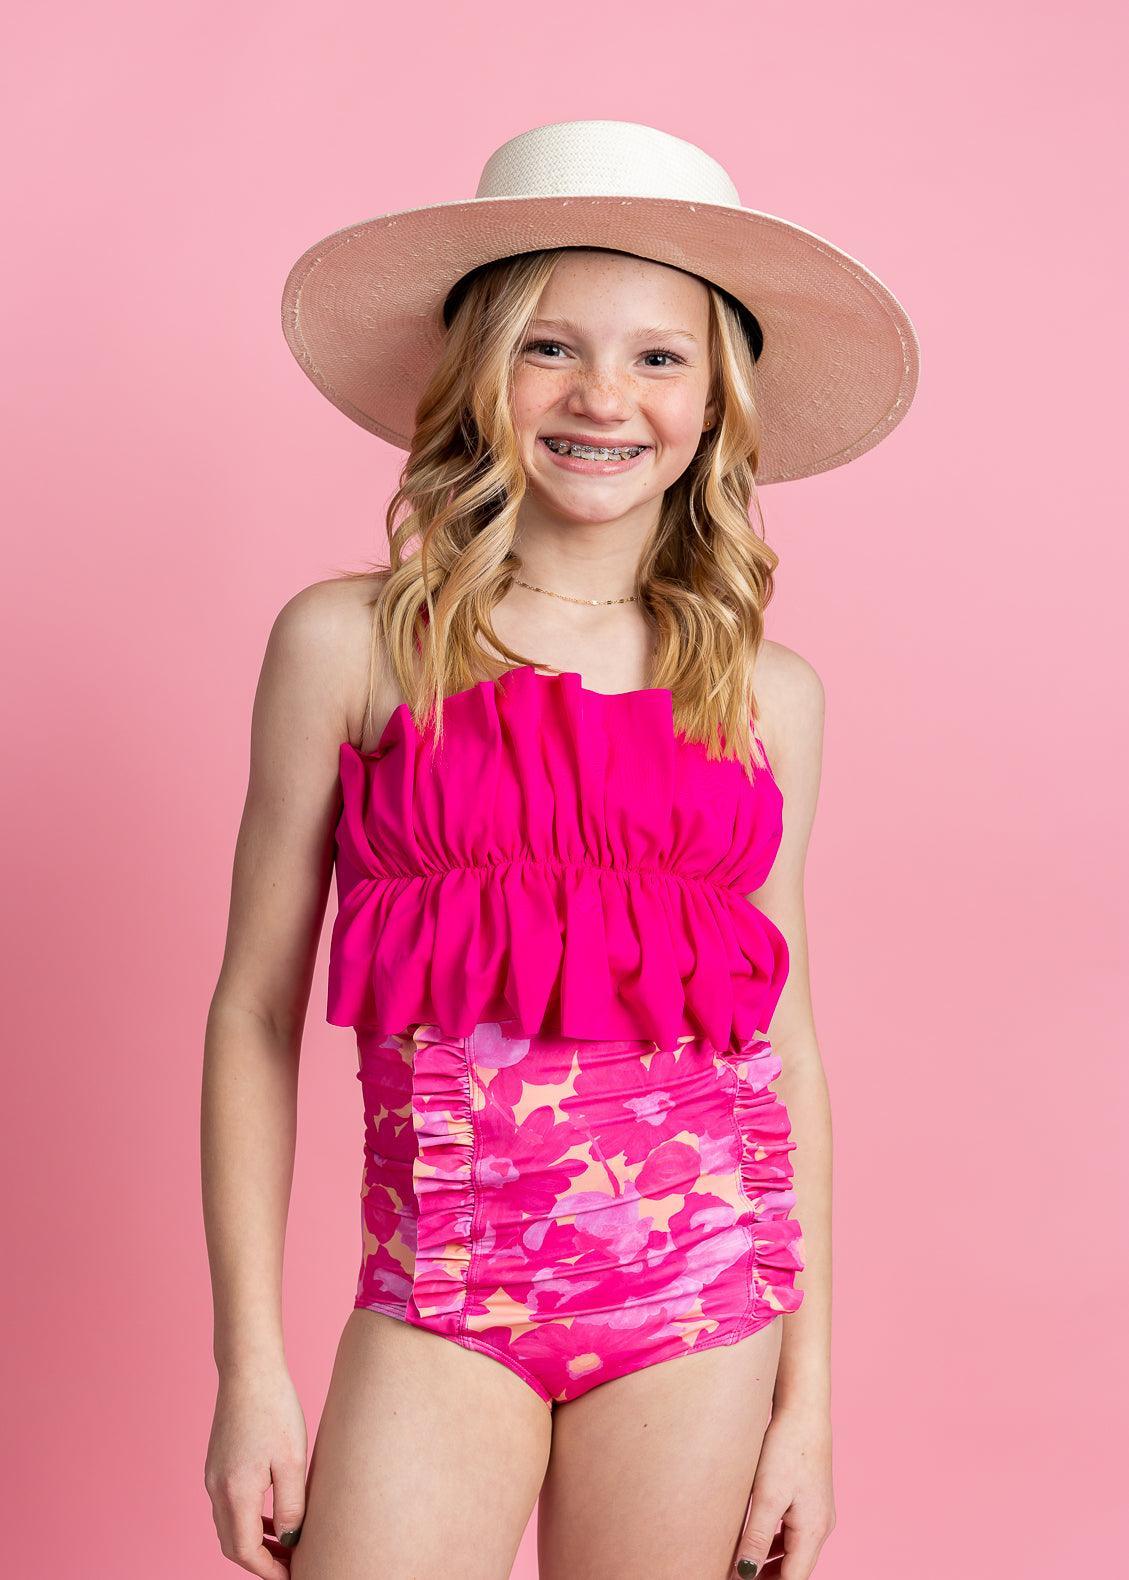 Teen Girl High-Waisted Swimsuit Bottoms - Pink Blooms